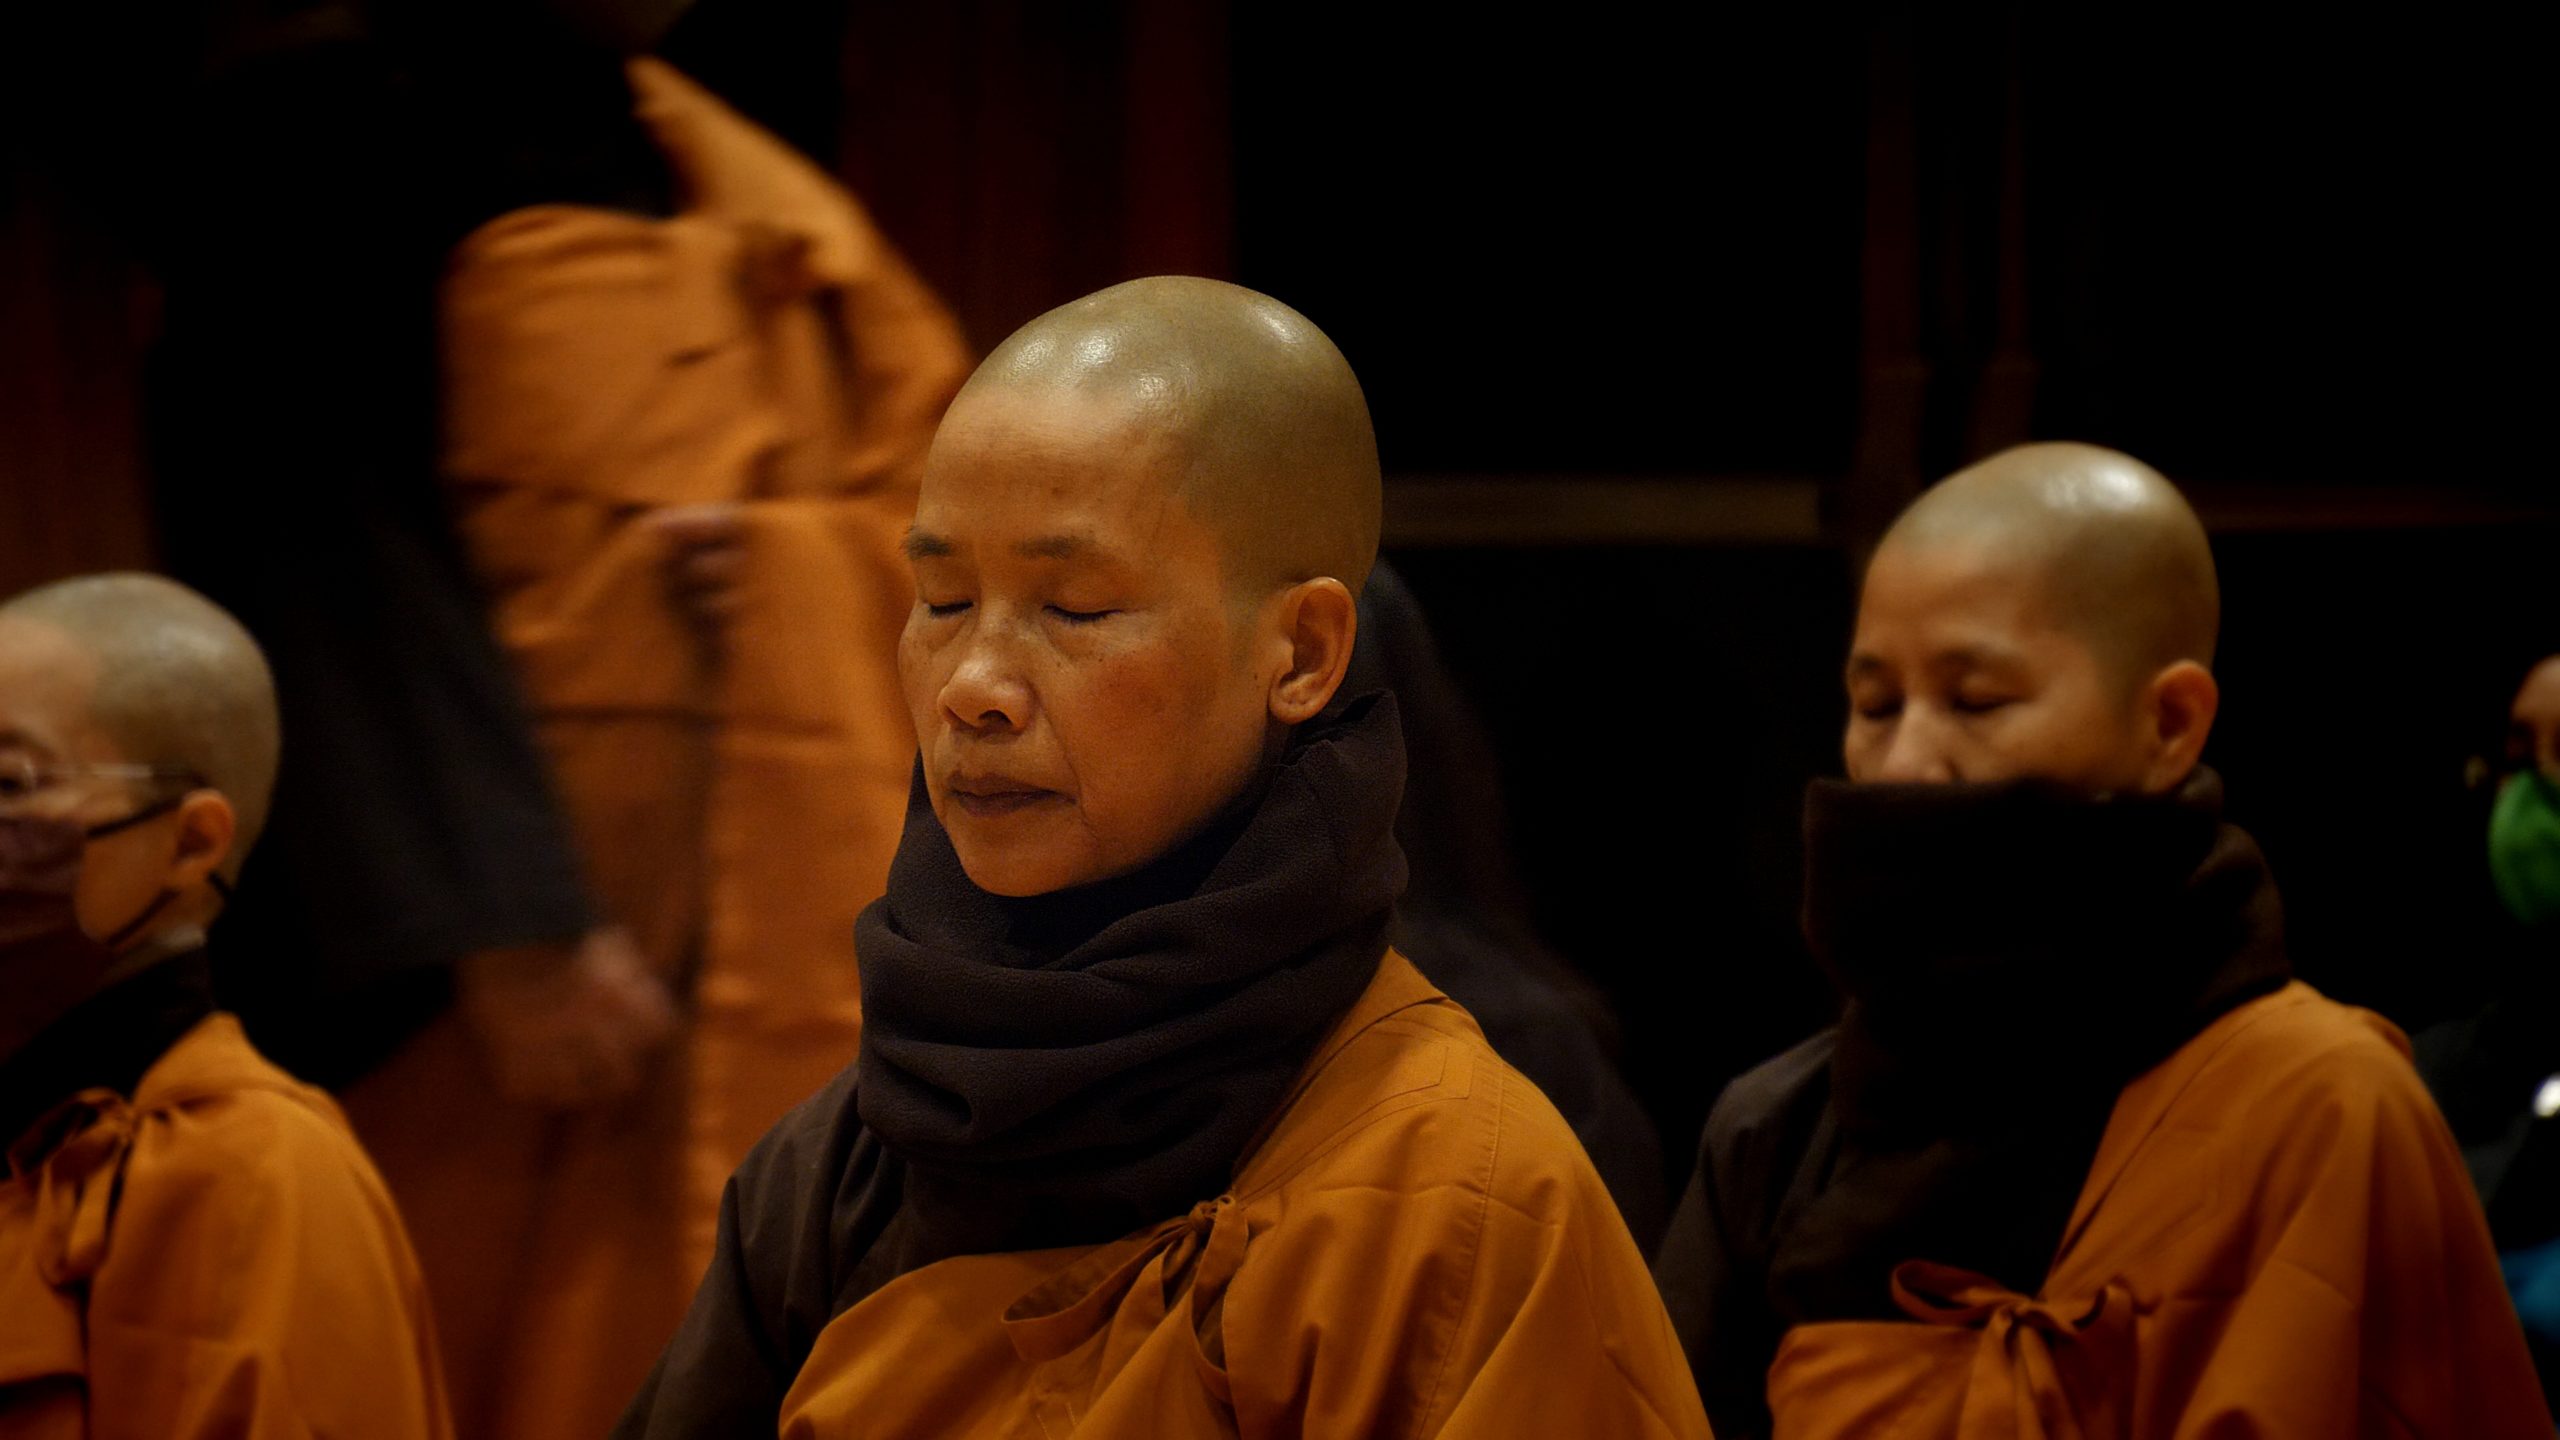 Sister Le Nghiem, Eyes closed in Meditation